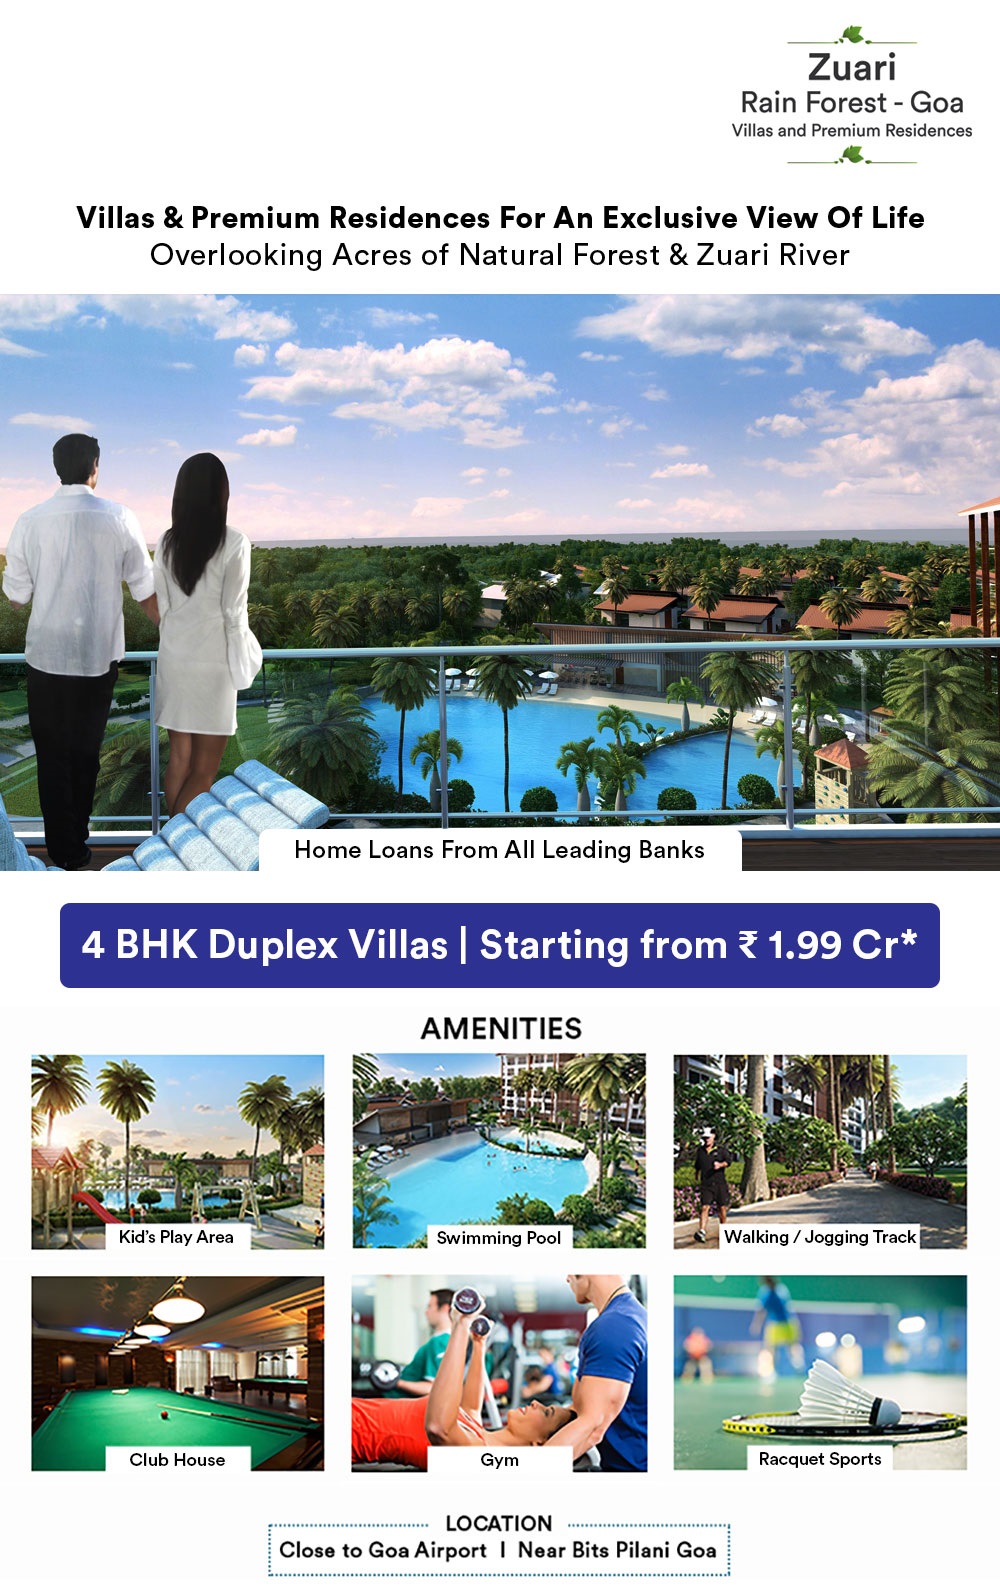 Own 4 BHK duplex villas overlooking acres of natural forest & Zuari River at Zuari Rain Forest in Goa Update